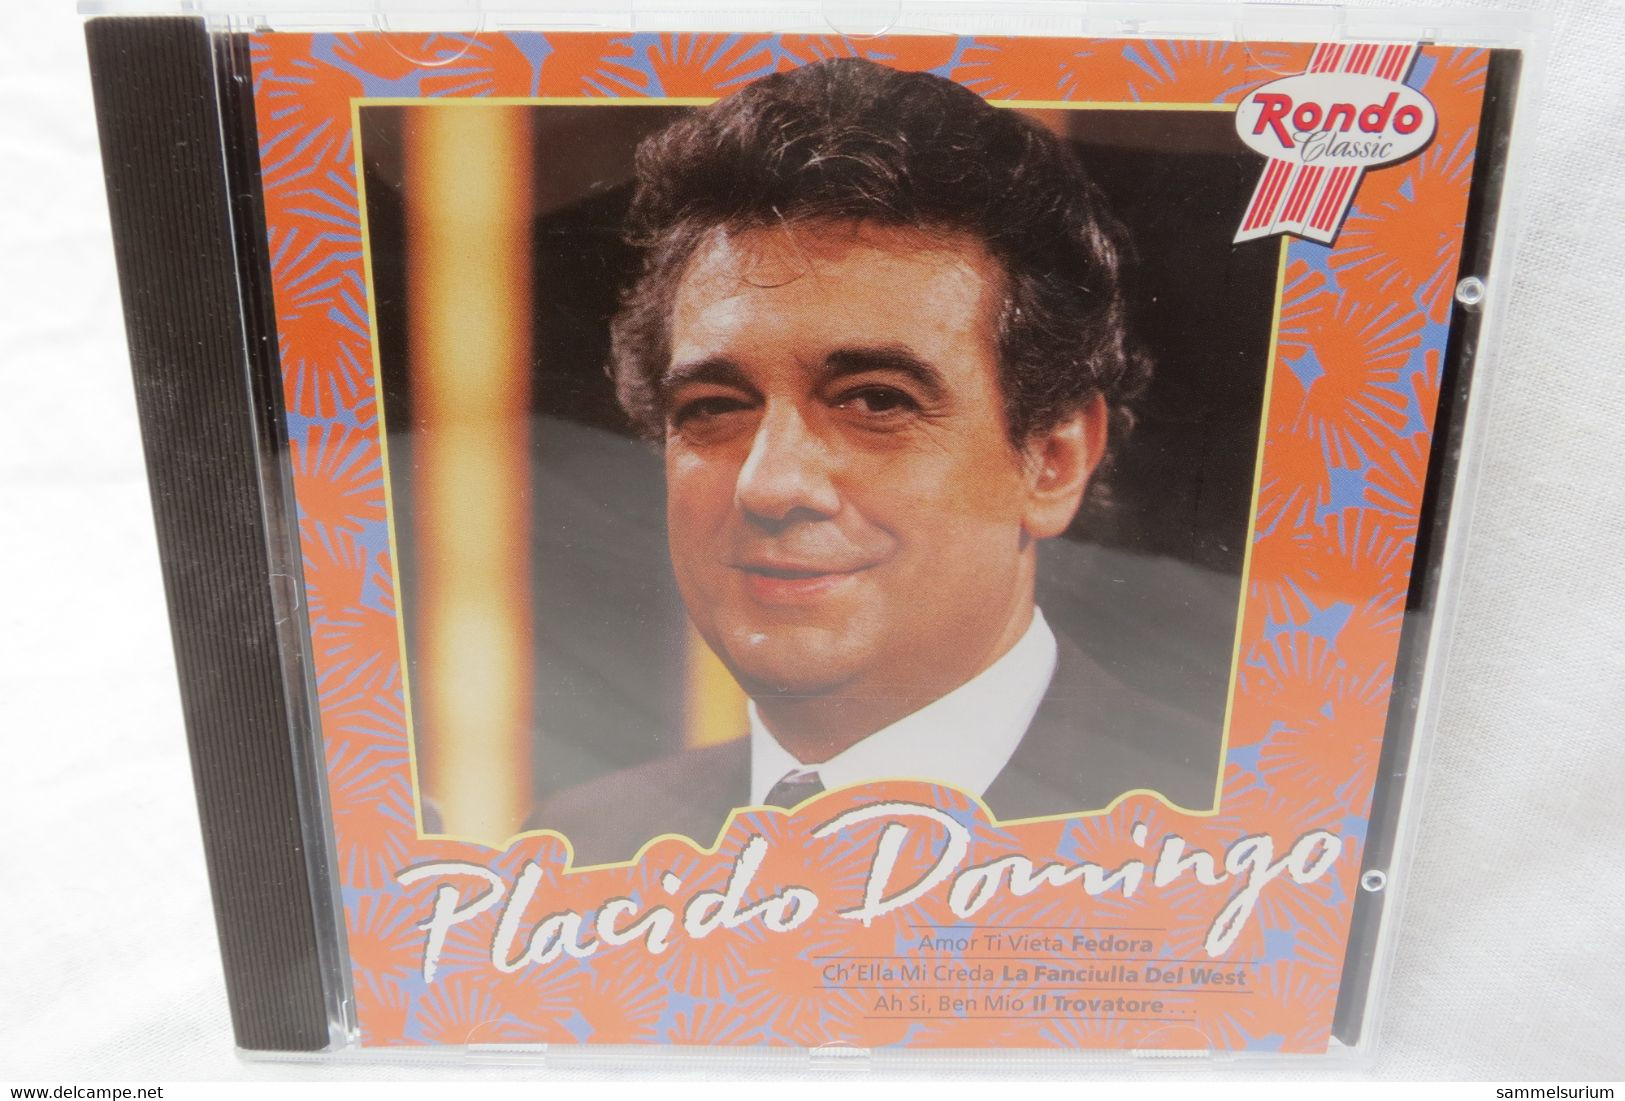 CD "Placido Domingo" Placido Domingo - Opera